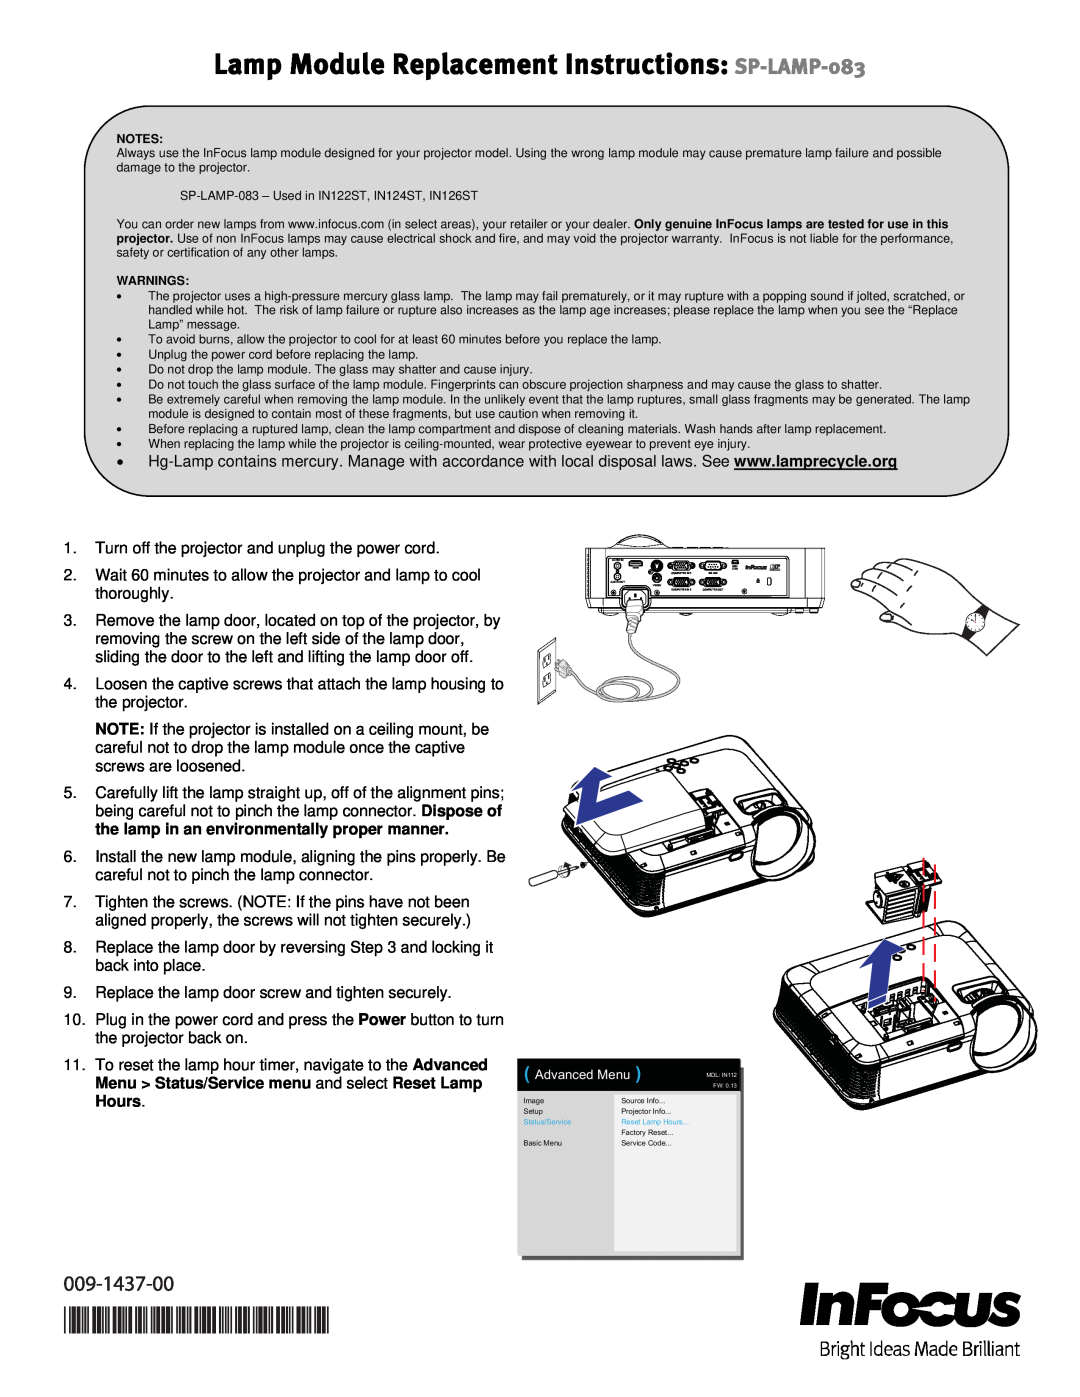 InFocus warranty Lamp Module Replacement Instructions SP-LAMP-083, Advanced Menu 